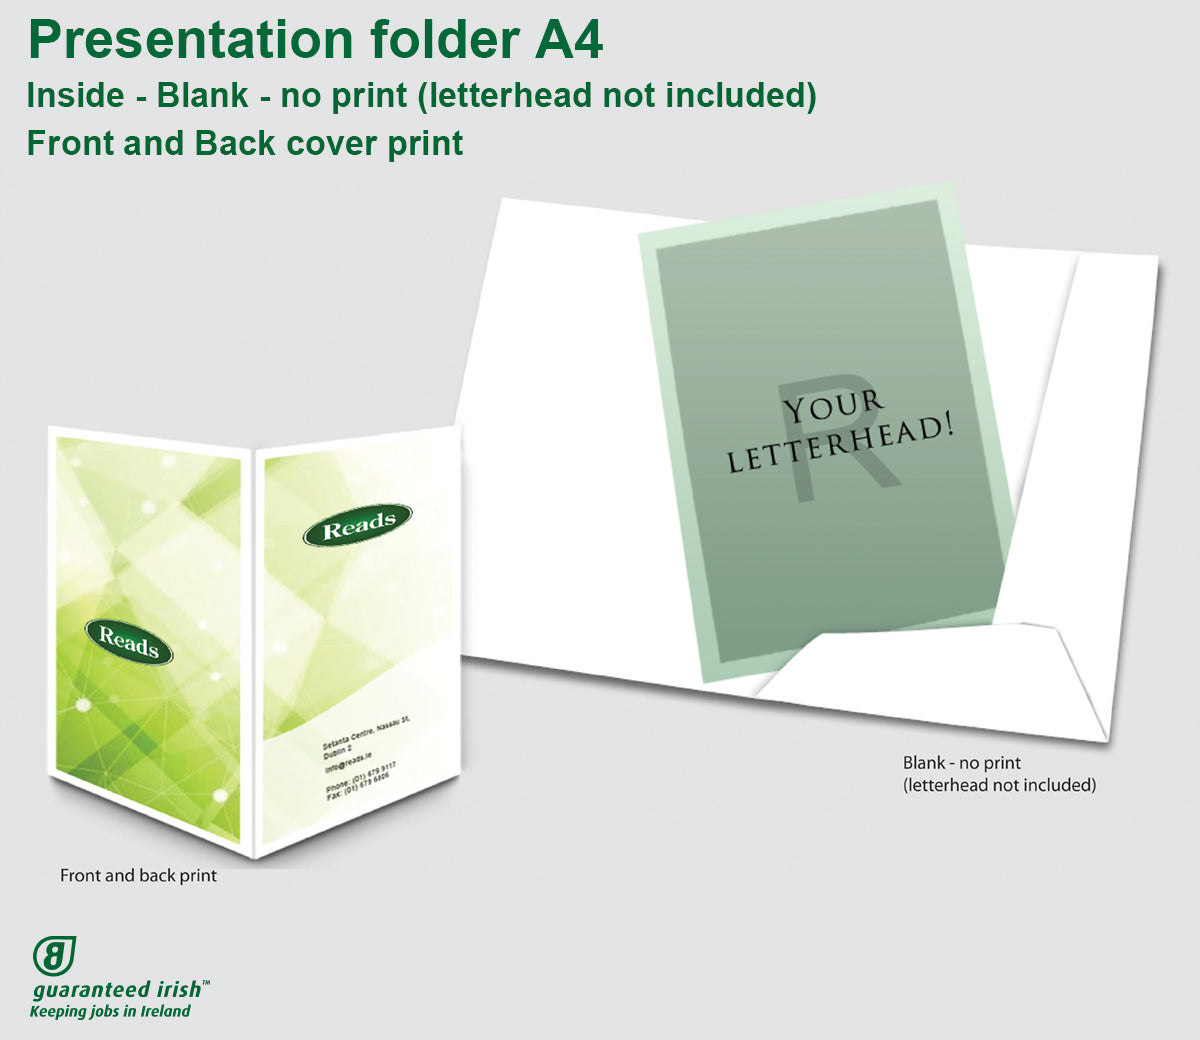 Presentation folder A4 - Inside blank - Front and Back cover print